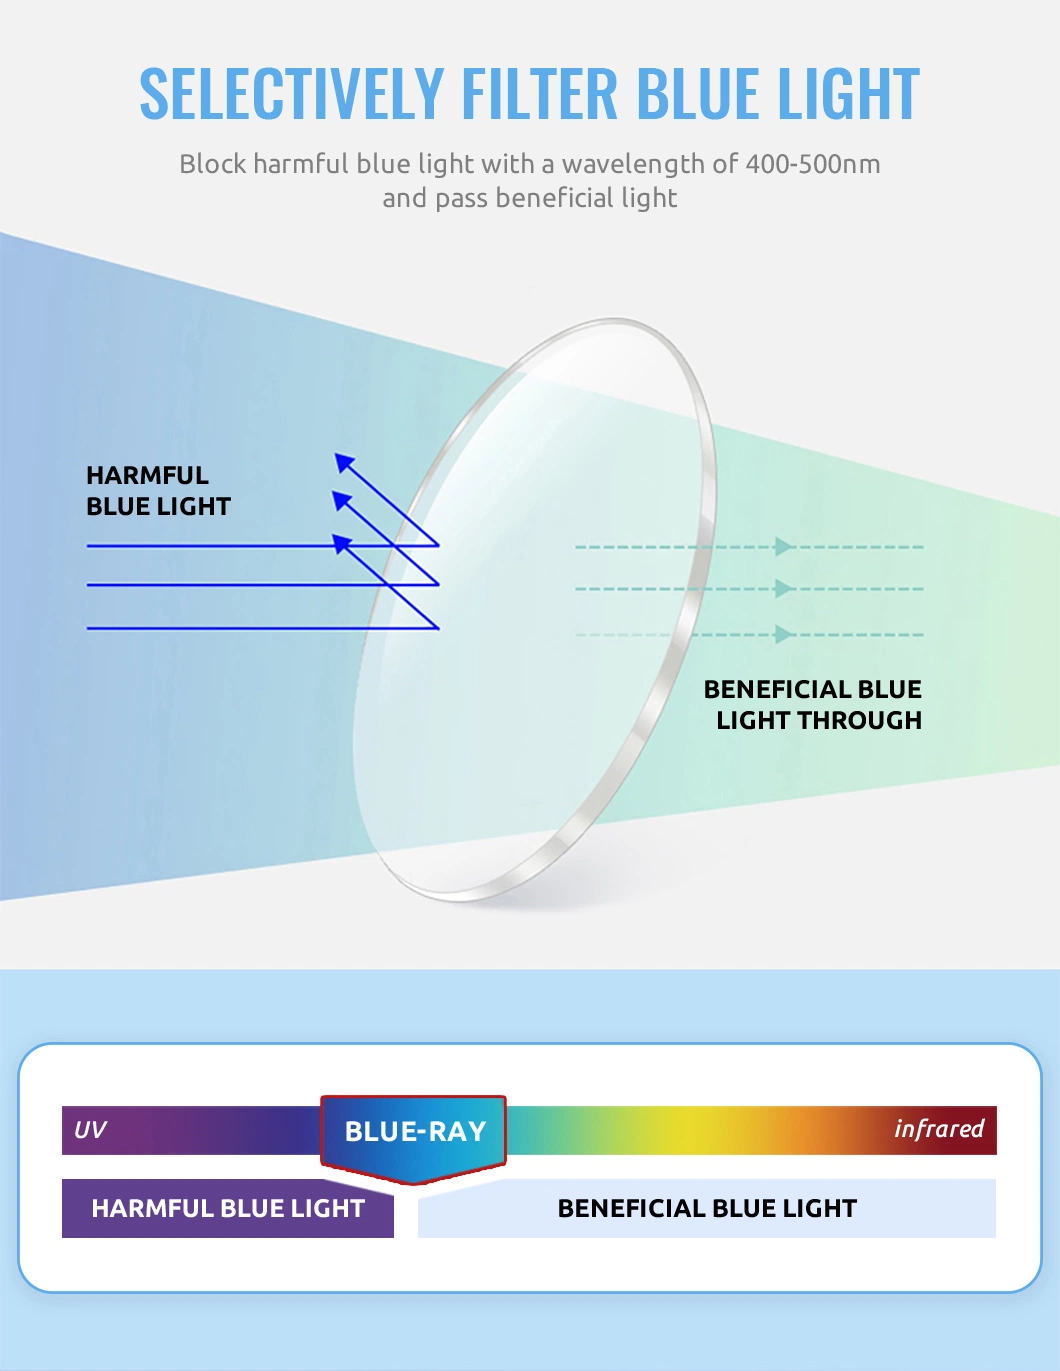 1.56 Photochromic Blue Cut Optical Hmc Resin/Plastic Lens Progressive Multifocal Lens